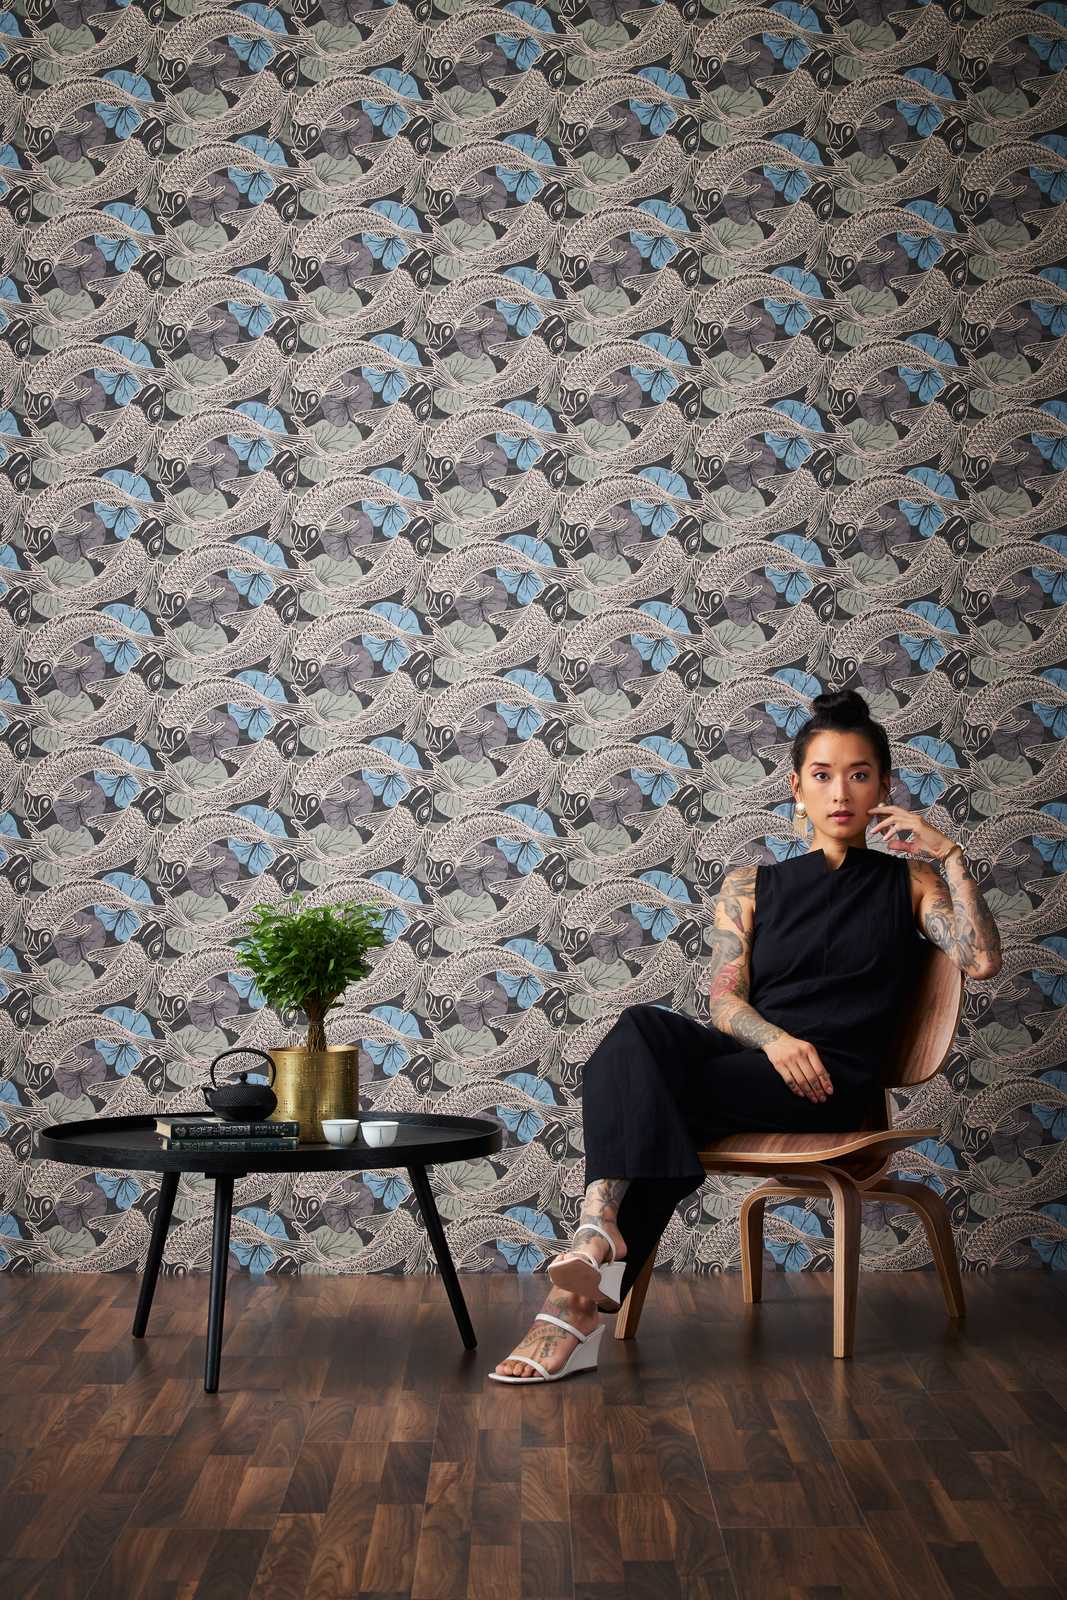             Papel pintado no tejido Diseño koi asiático con efecto metálico - azul, metálico, negro
        